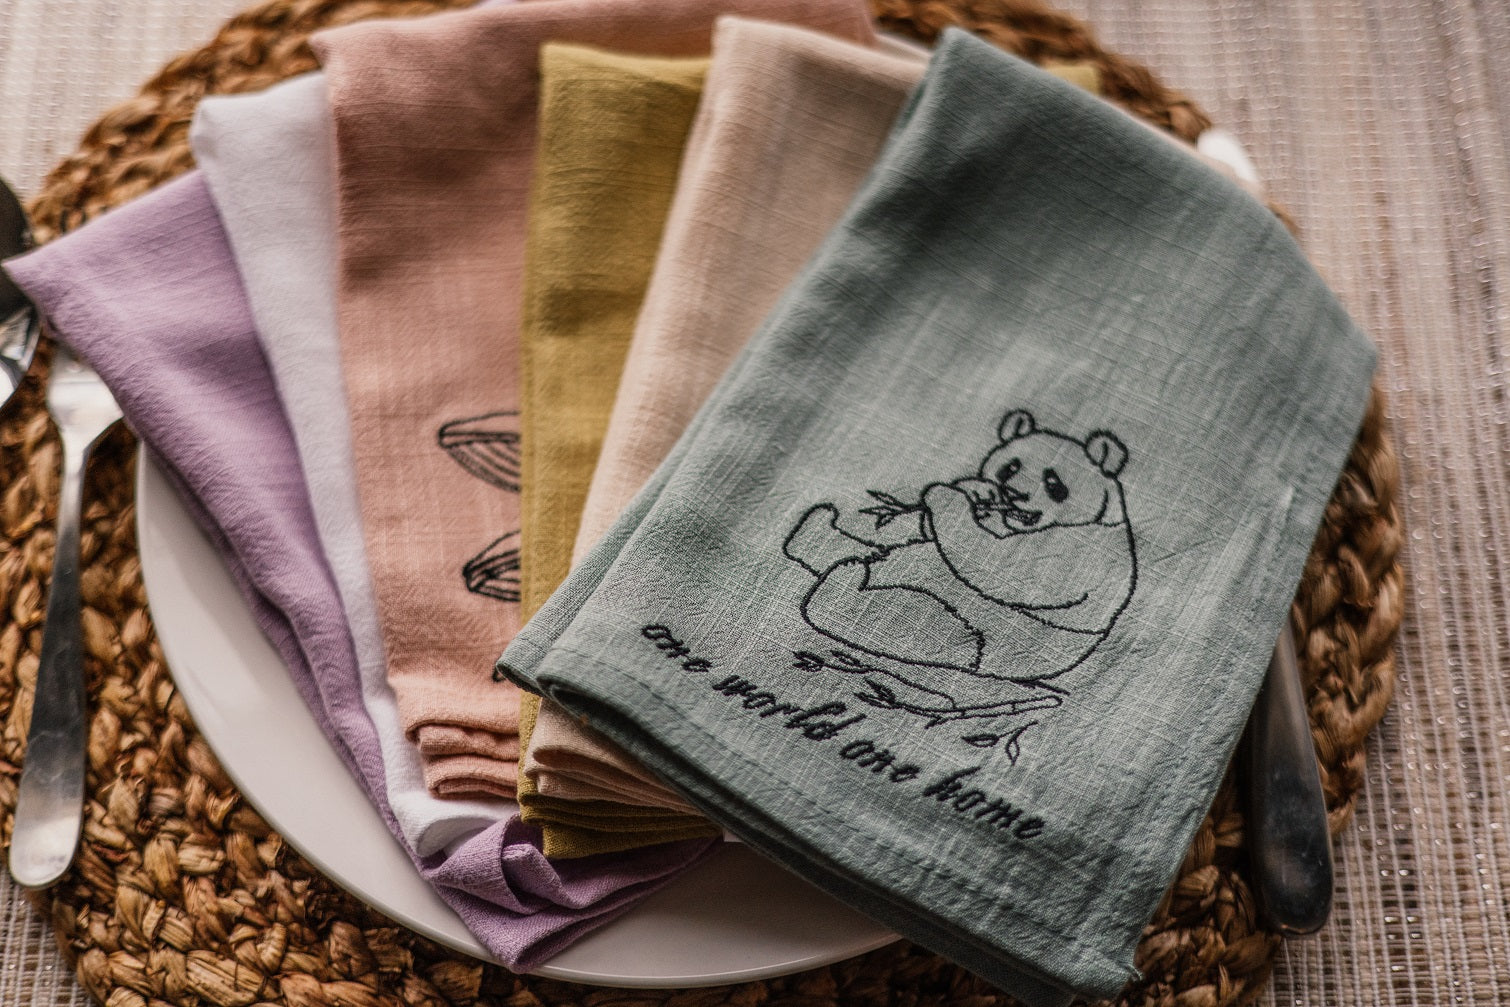 Washable Premium Quality Animal Table Cloth Napkins – This is Miao